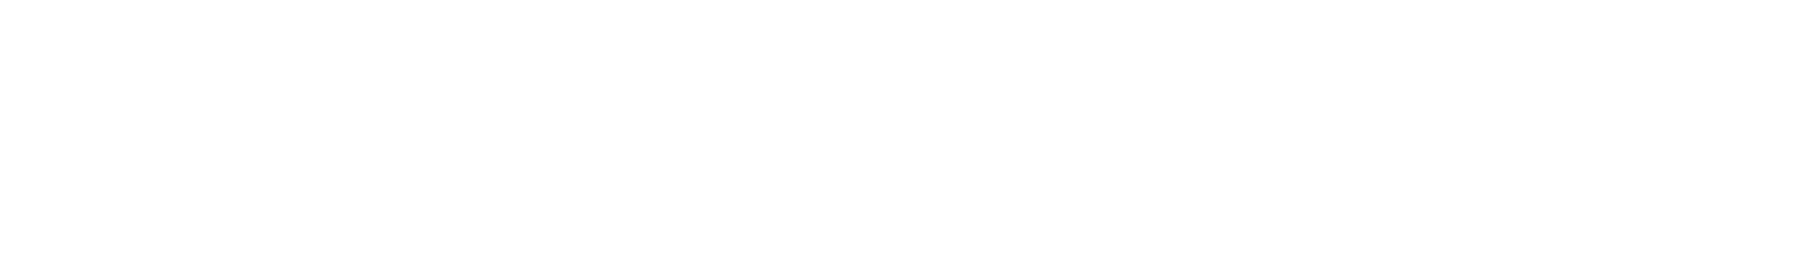 FS logo line